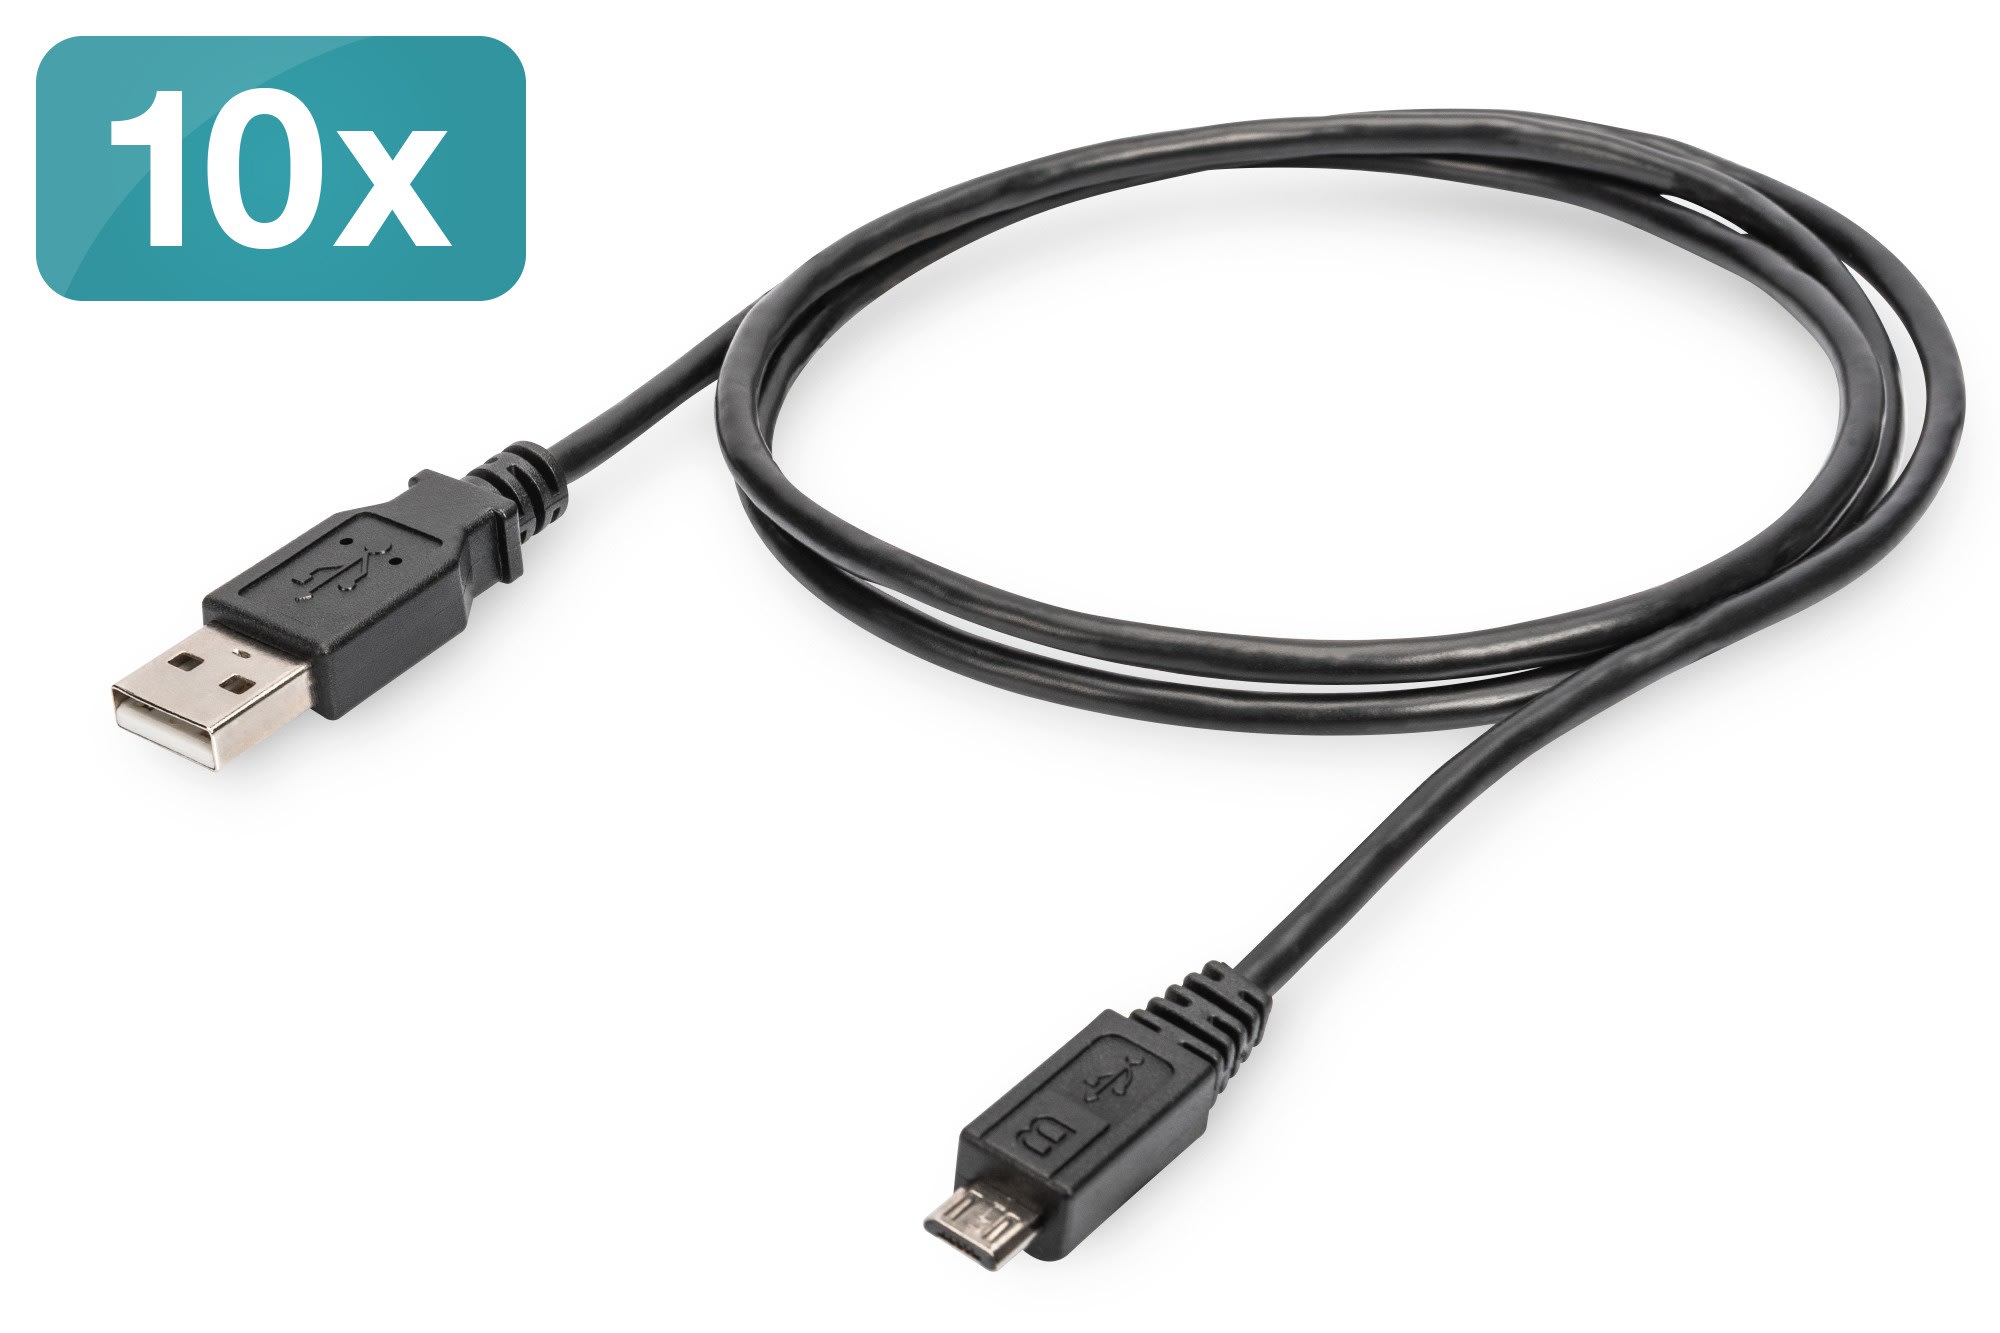 Assmann Electronic - USB 2.0 connection cable, type A - micro B M-M, 1.0m, 10er Set, bl